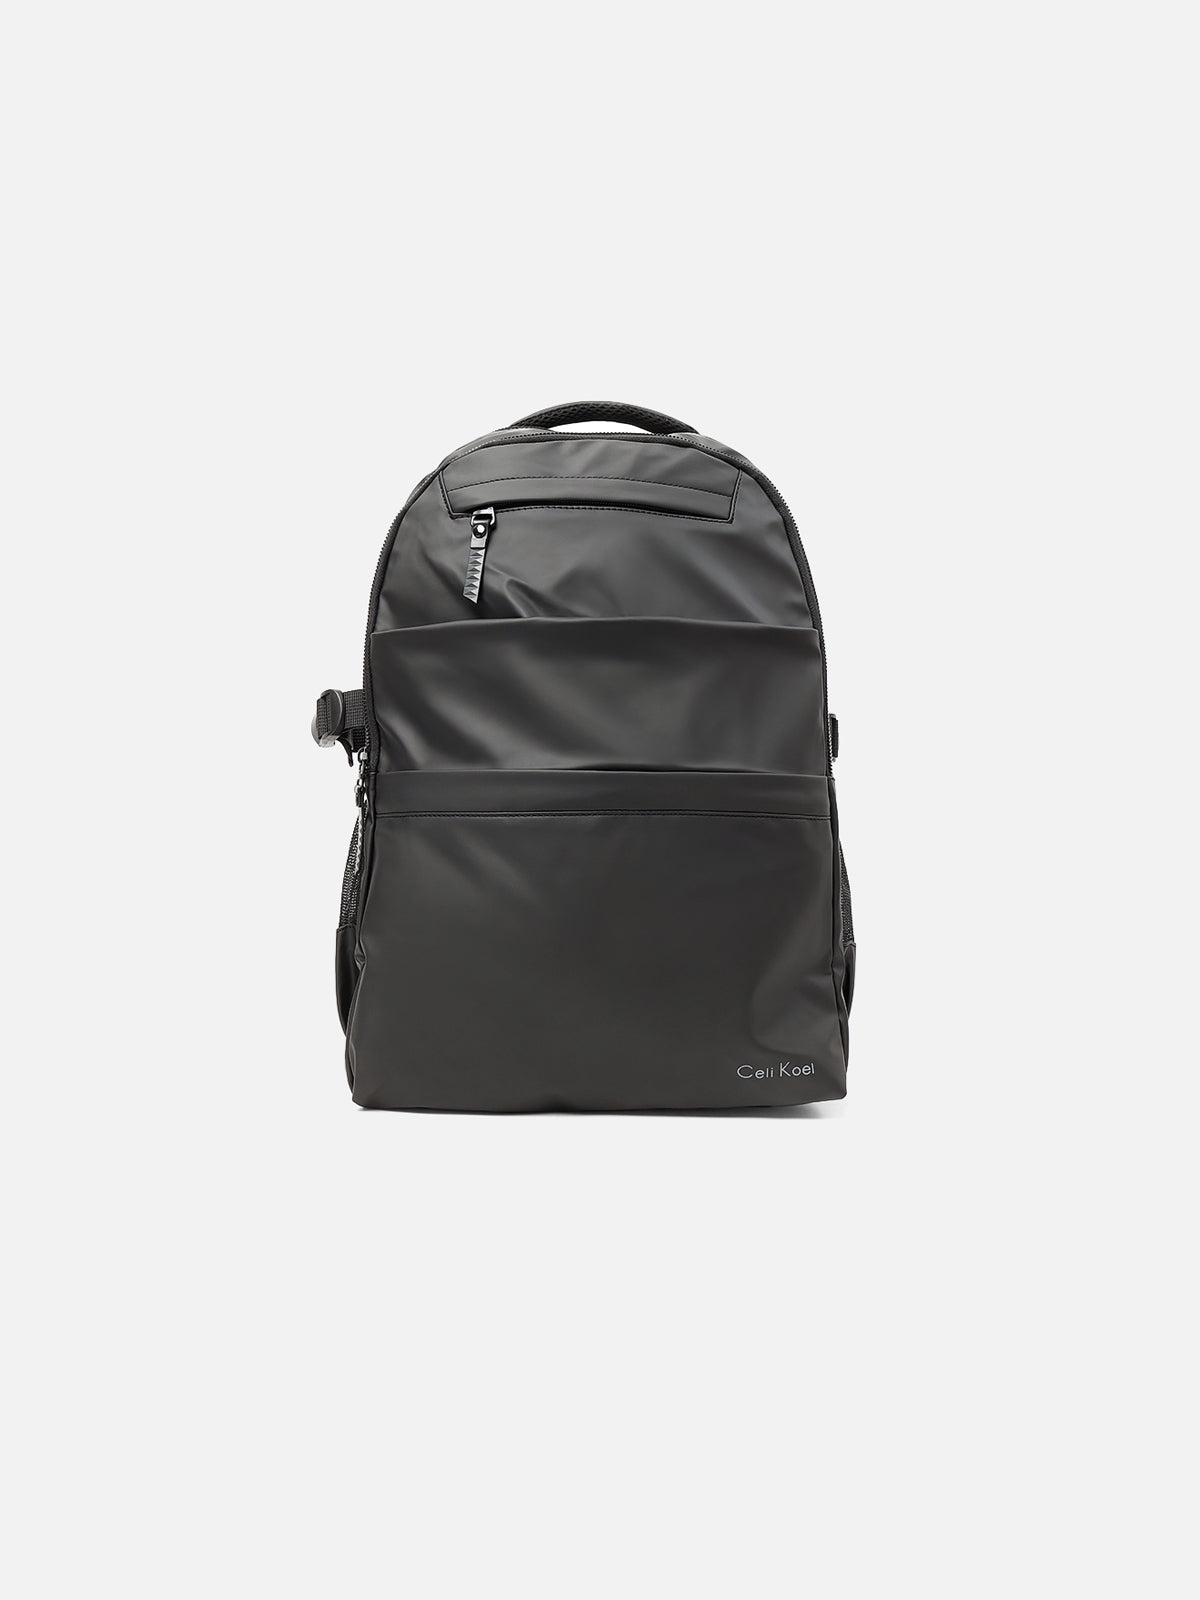 Black Backpack - FABG24-005